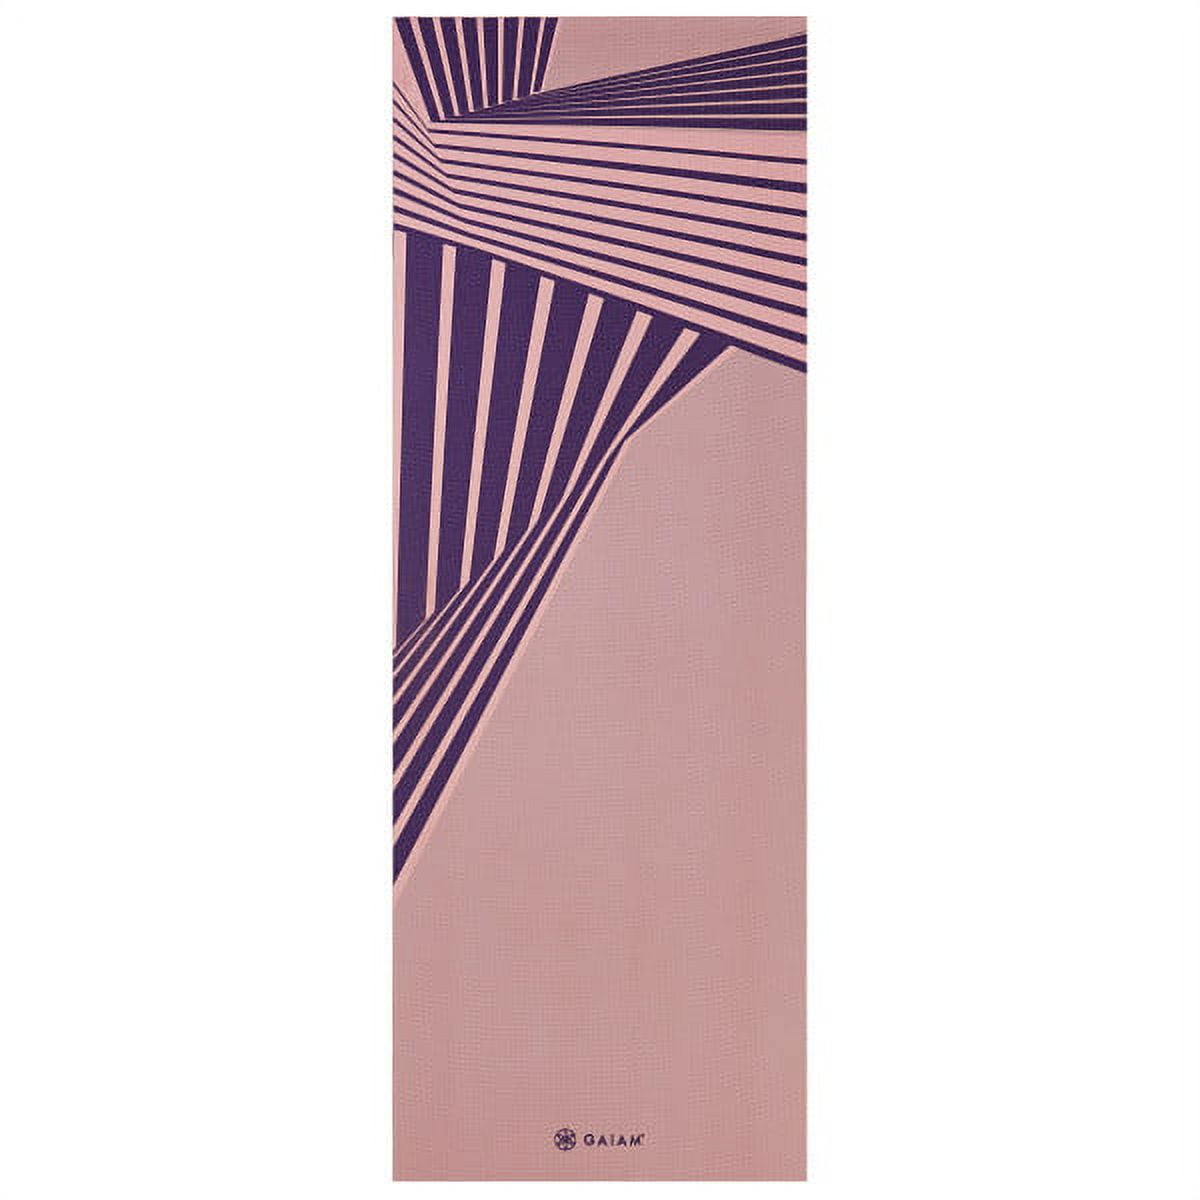 Gaiam Print Yoga Mat, Pink Cherry Blossom, 3mm 